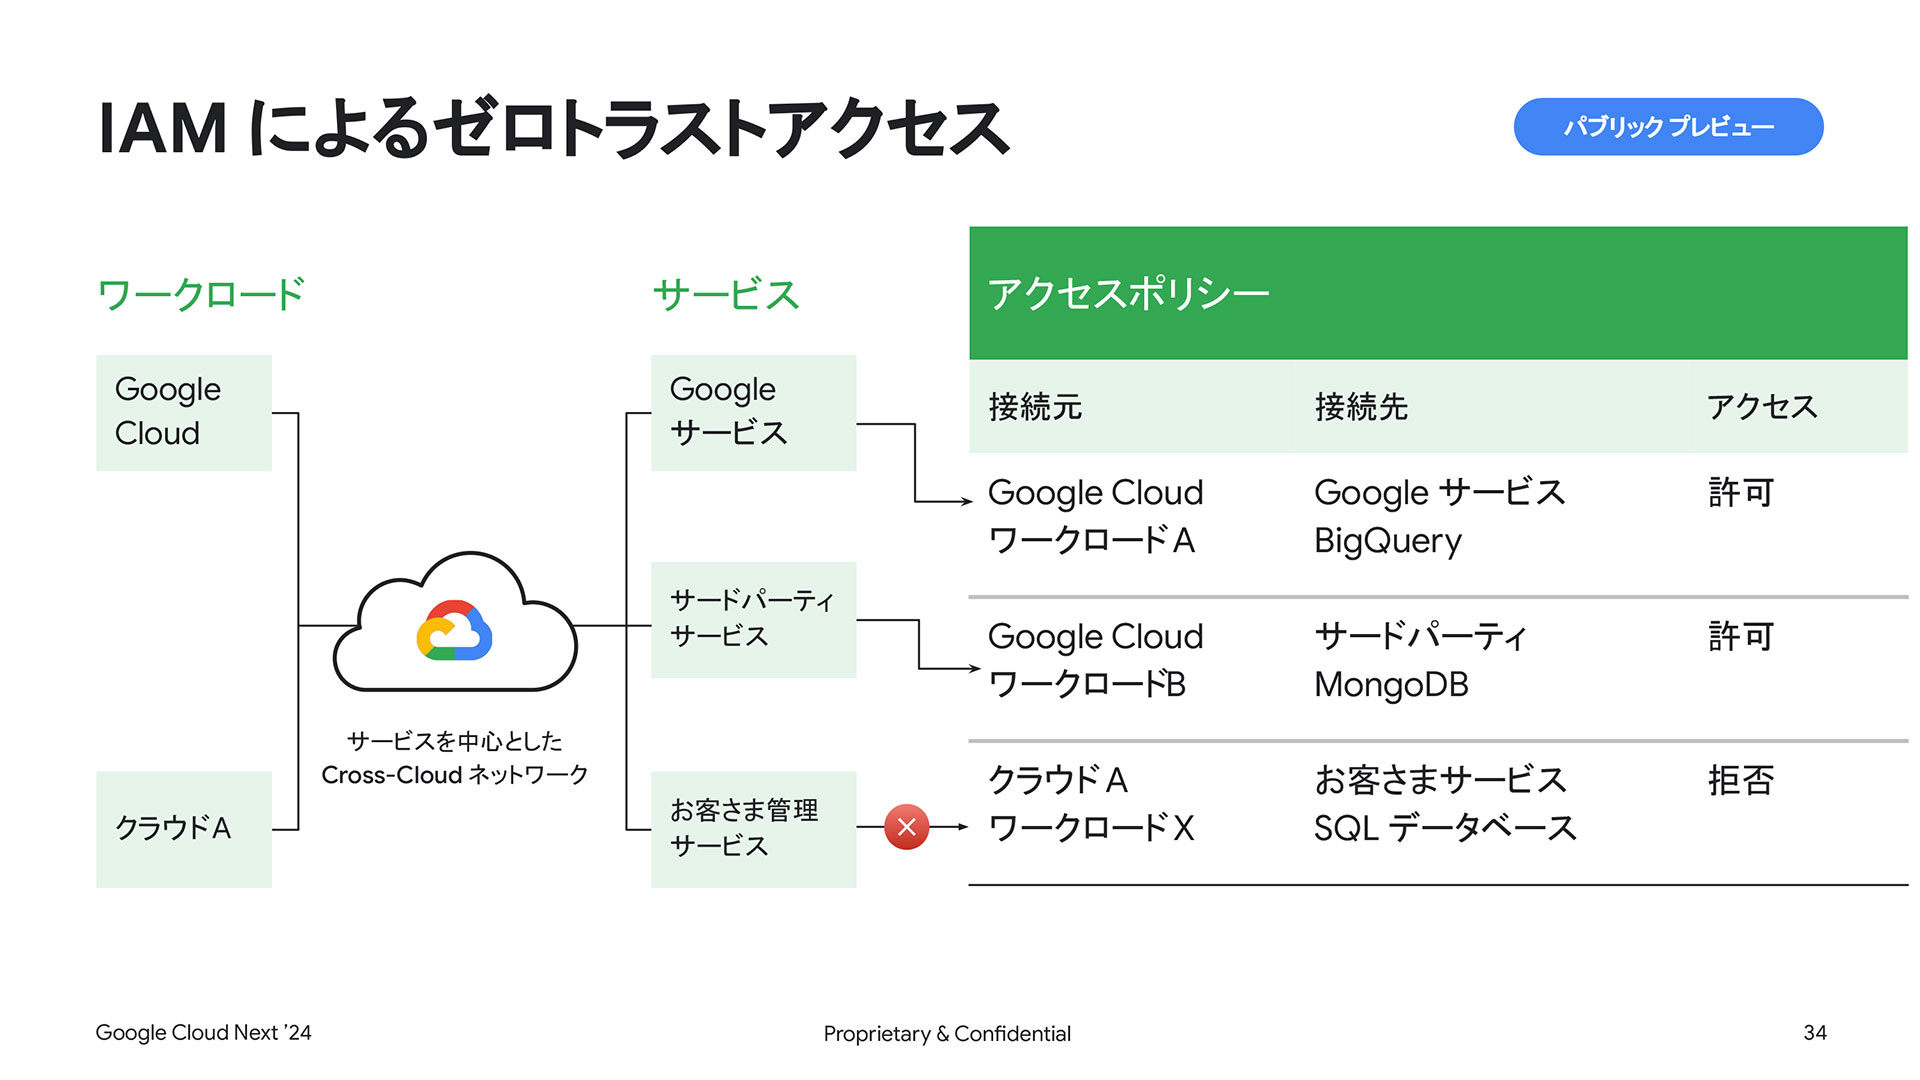 google-cloud-next-24-las-vegas-summary2